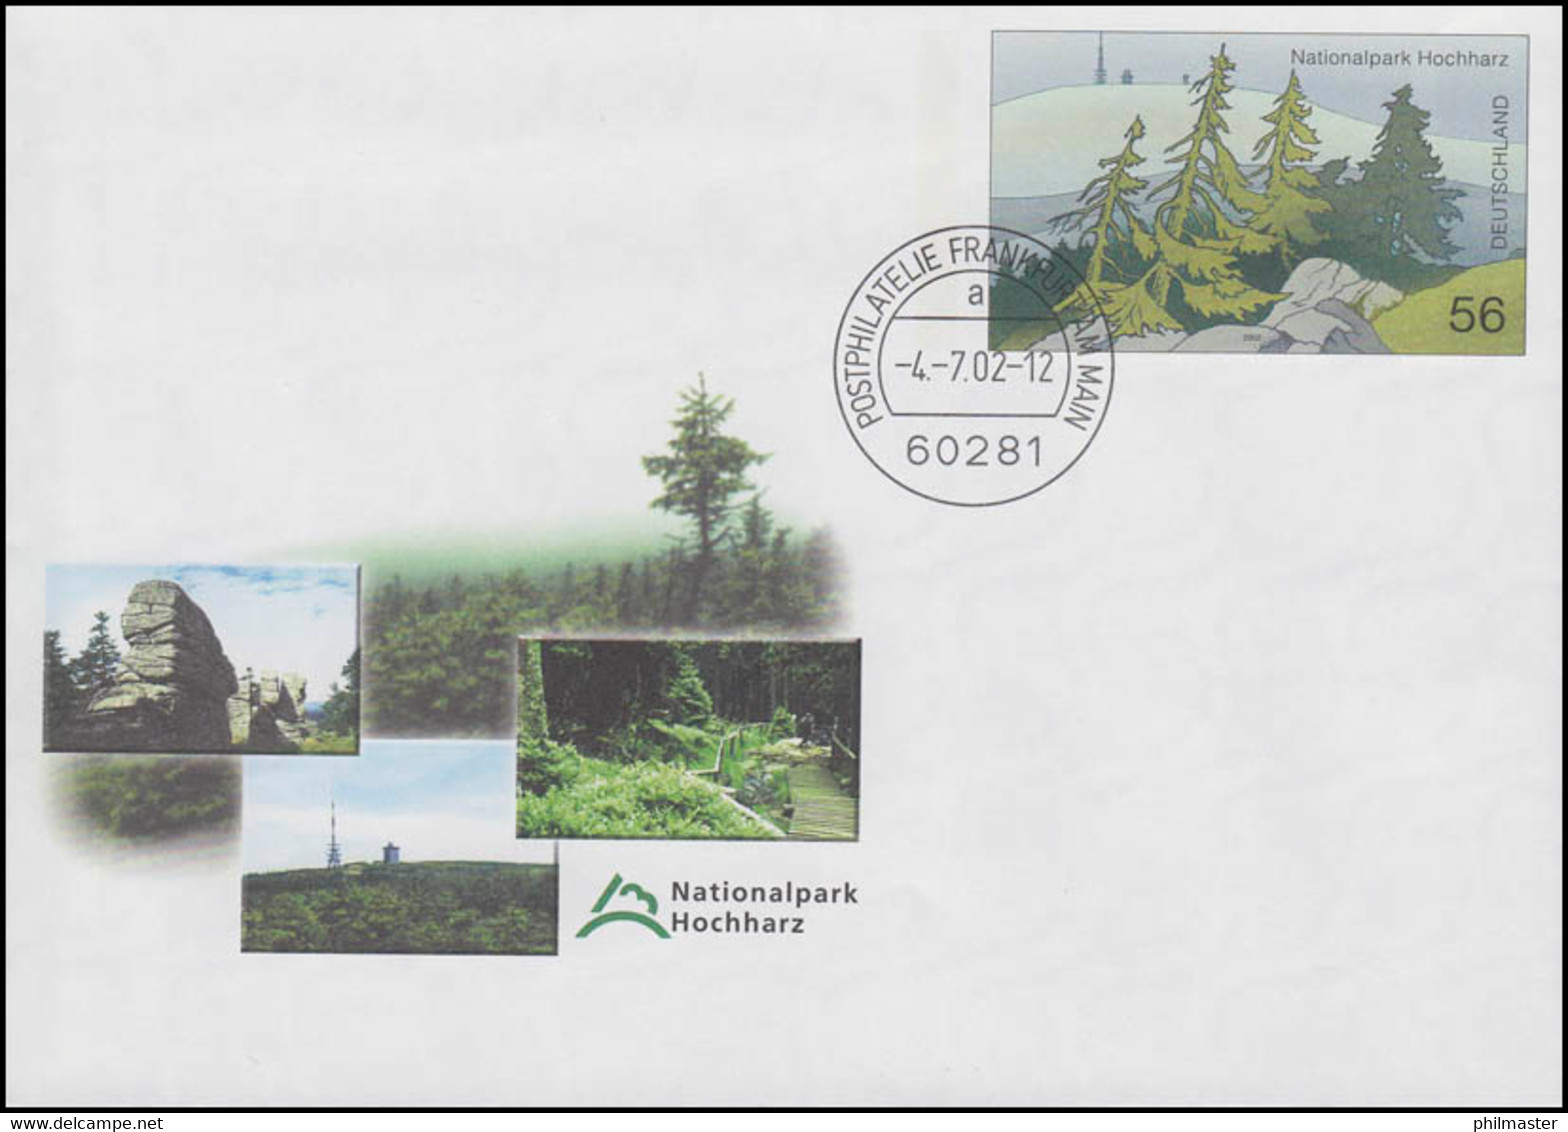 USo 39 Nationalpark Hochharz 2002, VS-O Frankfurt 4.7.2002 - Covers - Mint